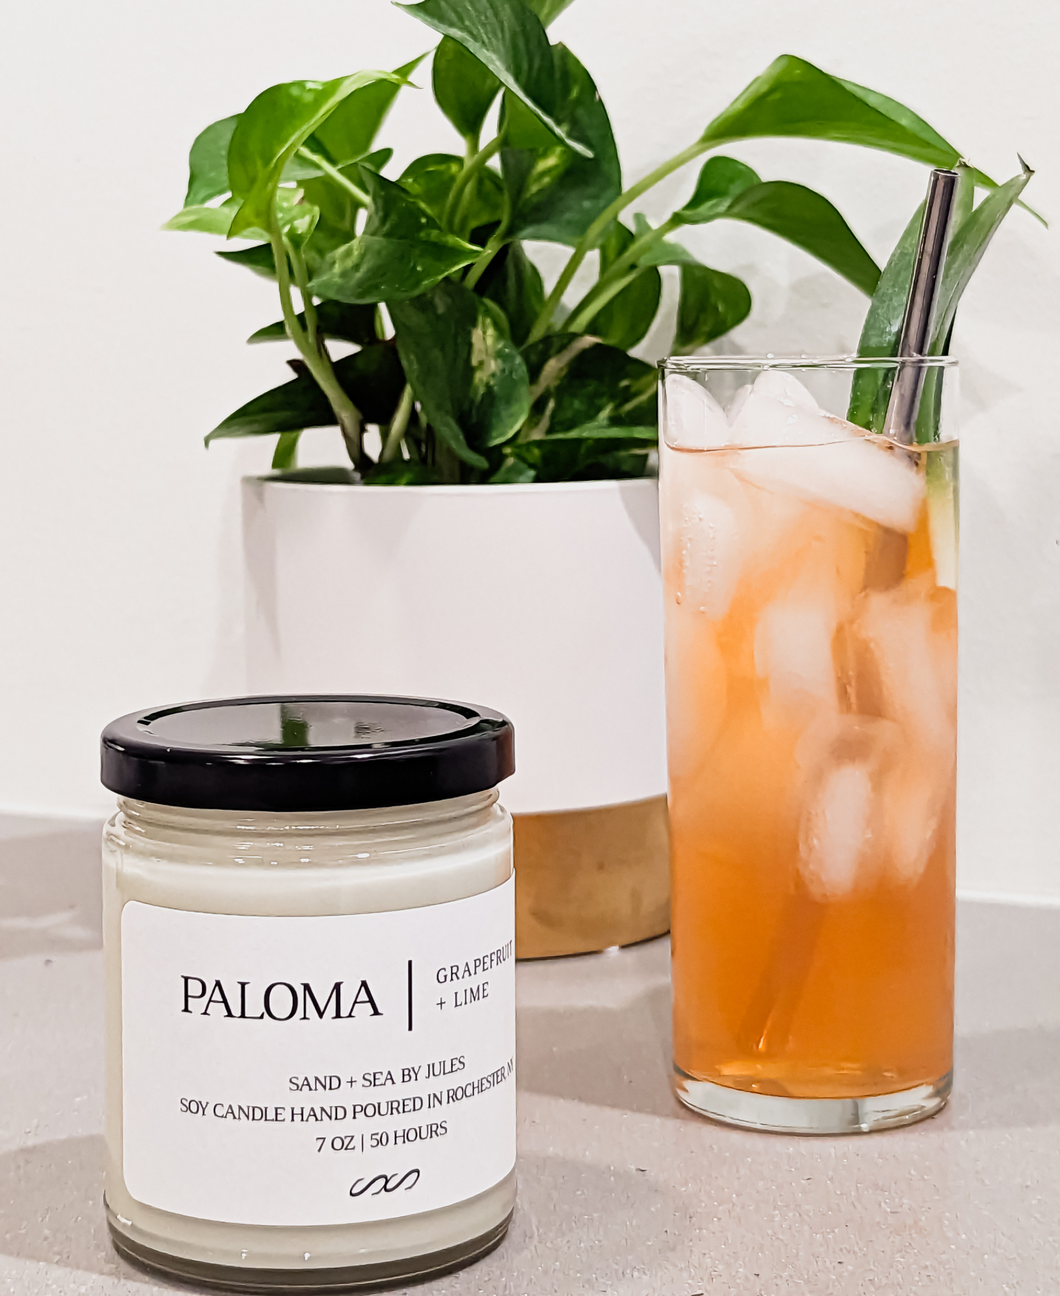 Paloma: Grapefruit + Lime